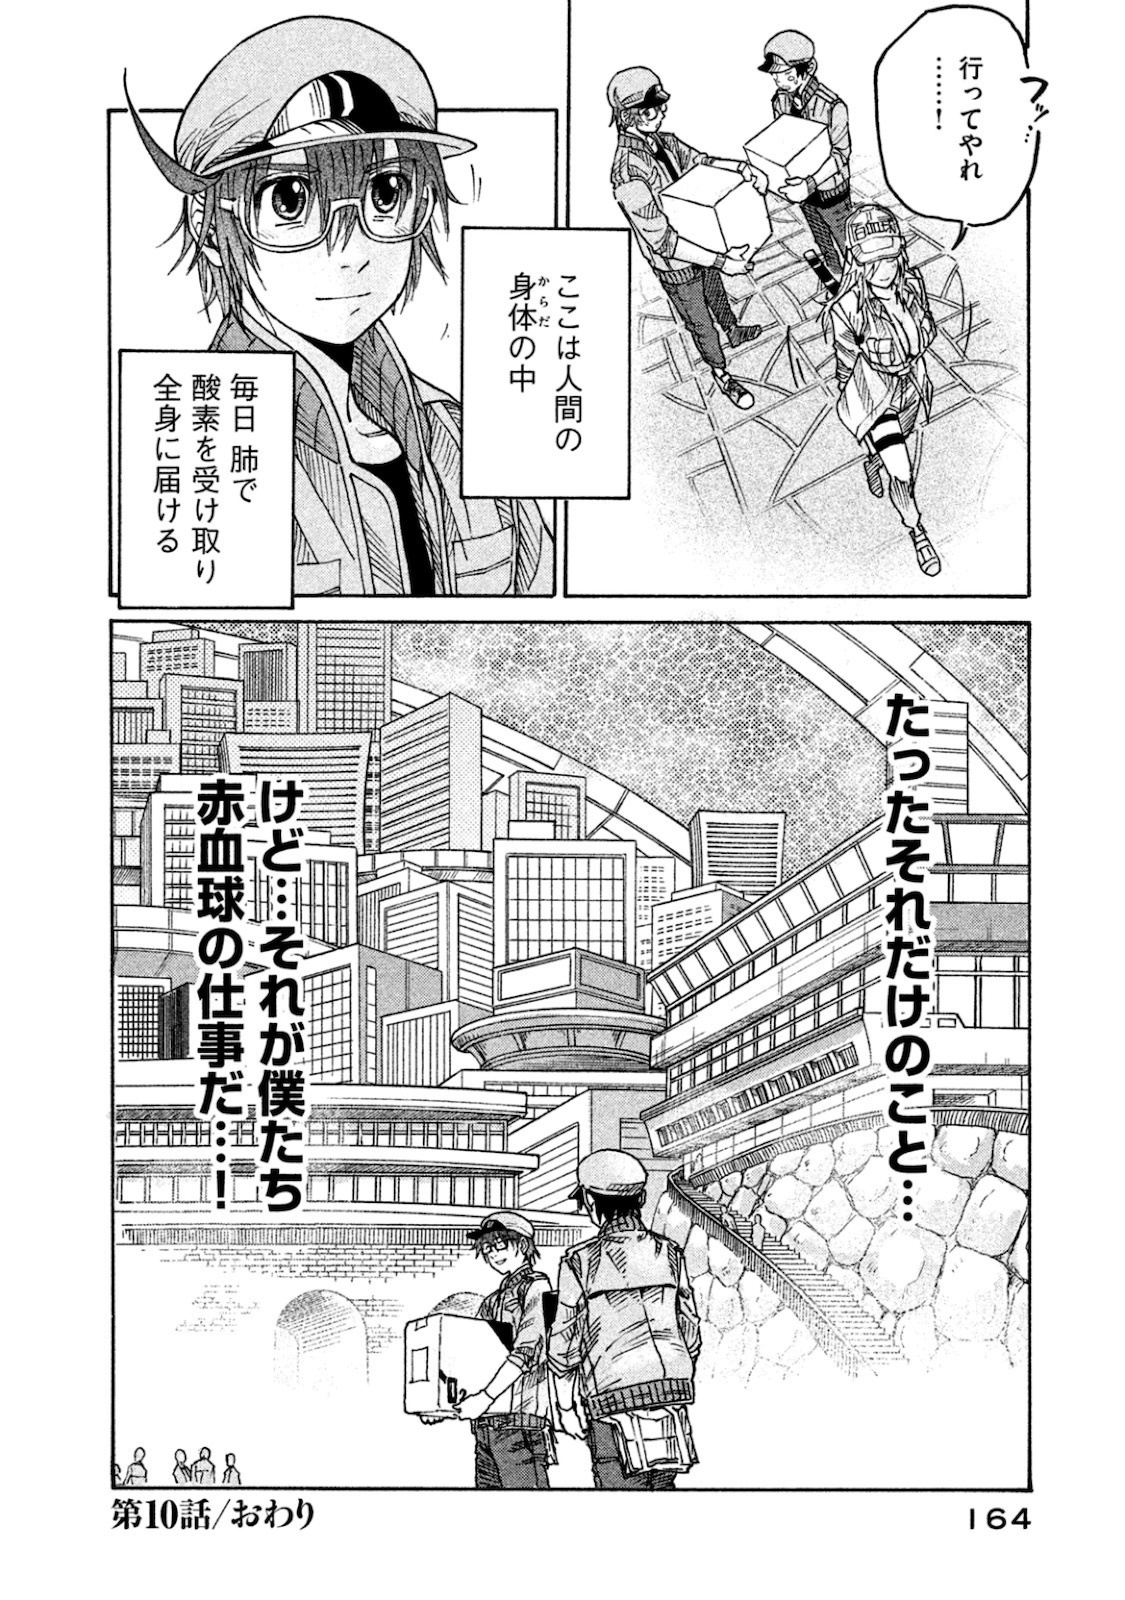 Hataraku Saibou BLACK - Chapter 10 - Page 38